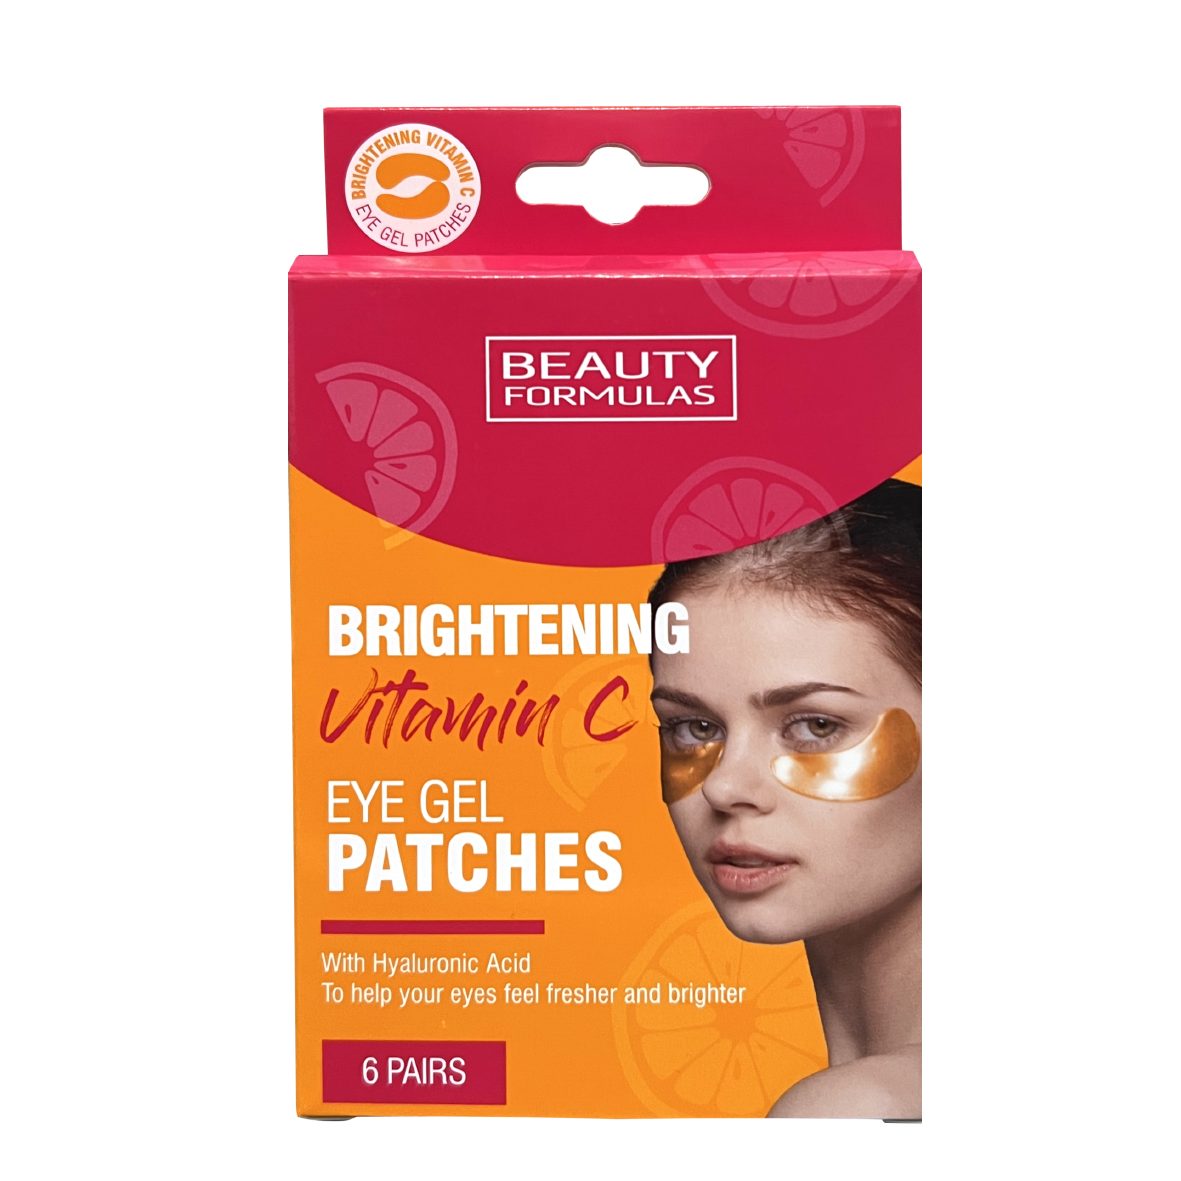 Vitamin C brightening eye gel patches 6pairs.